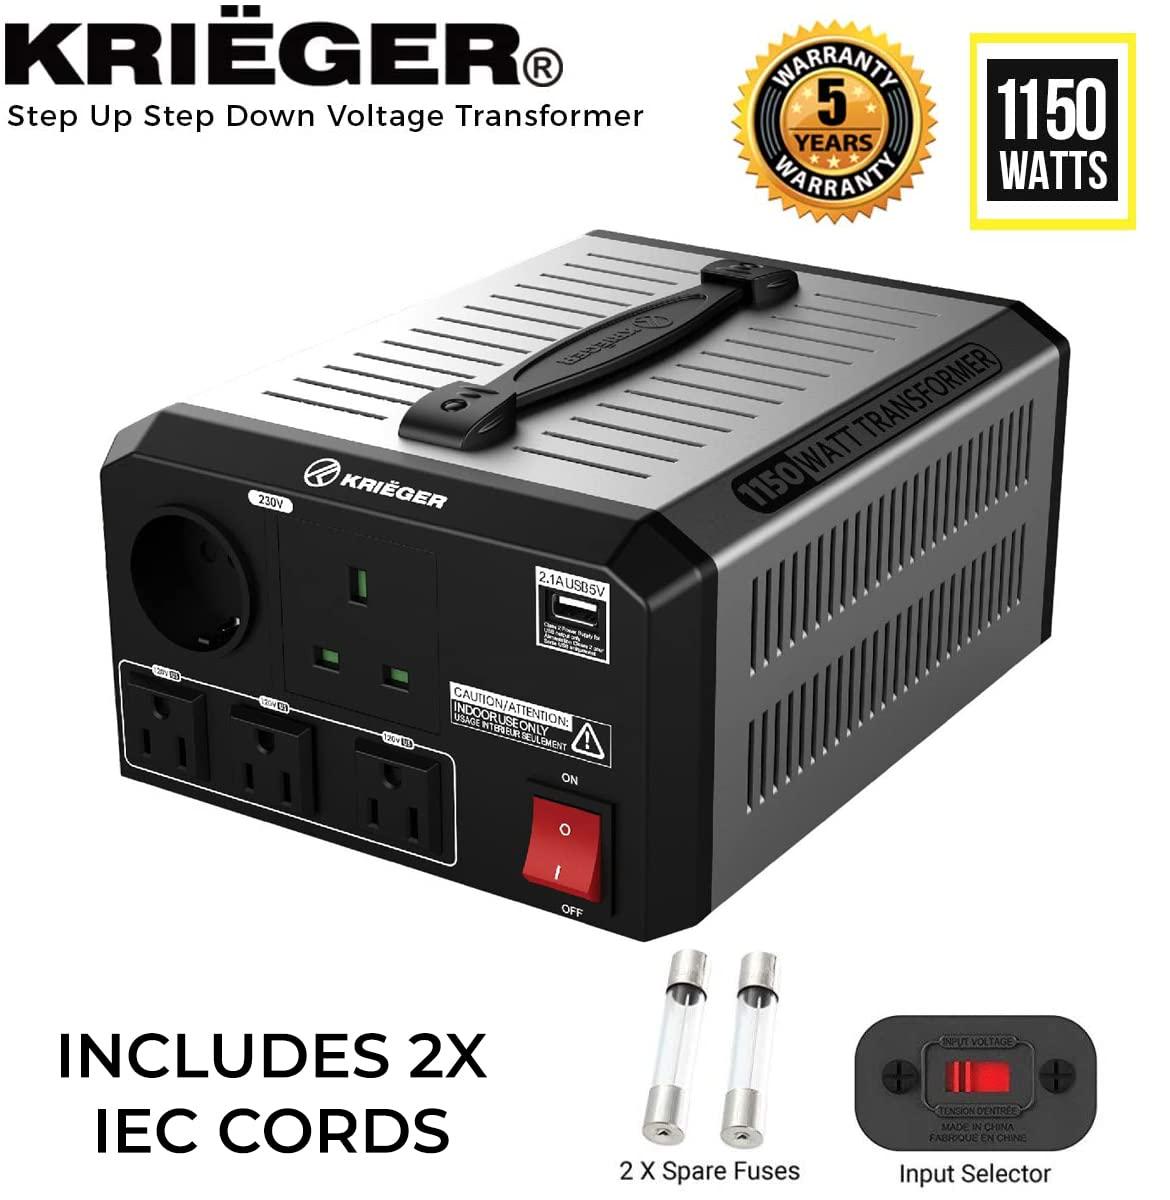 K KRIËGER, Krieger 1150 Watts Voltage Transformer, 110/120V to 220/240 Volts Step Up Step Down Voltage Converter with AC Outlets - CE Approved